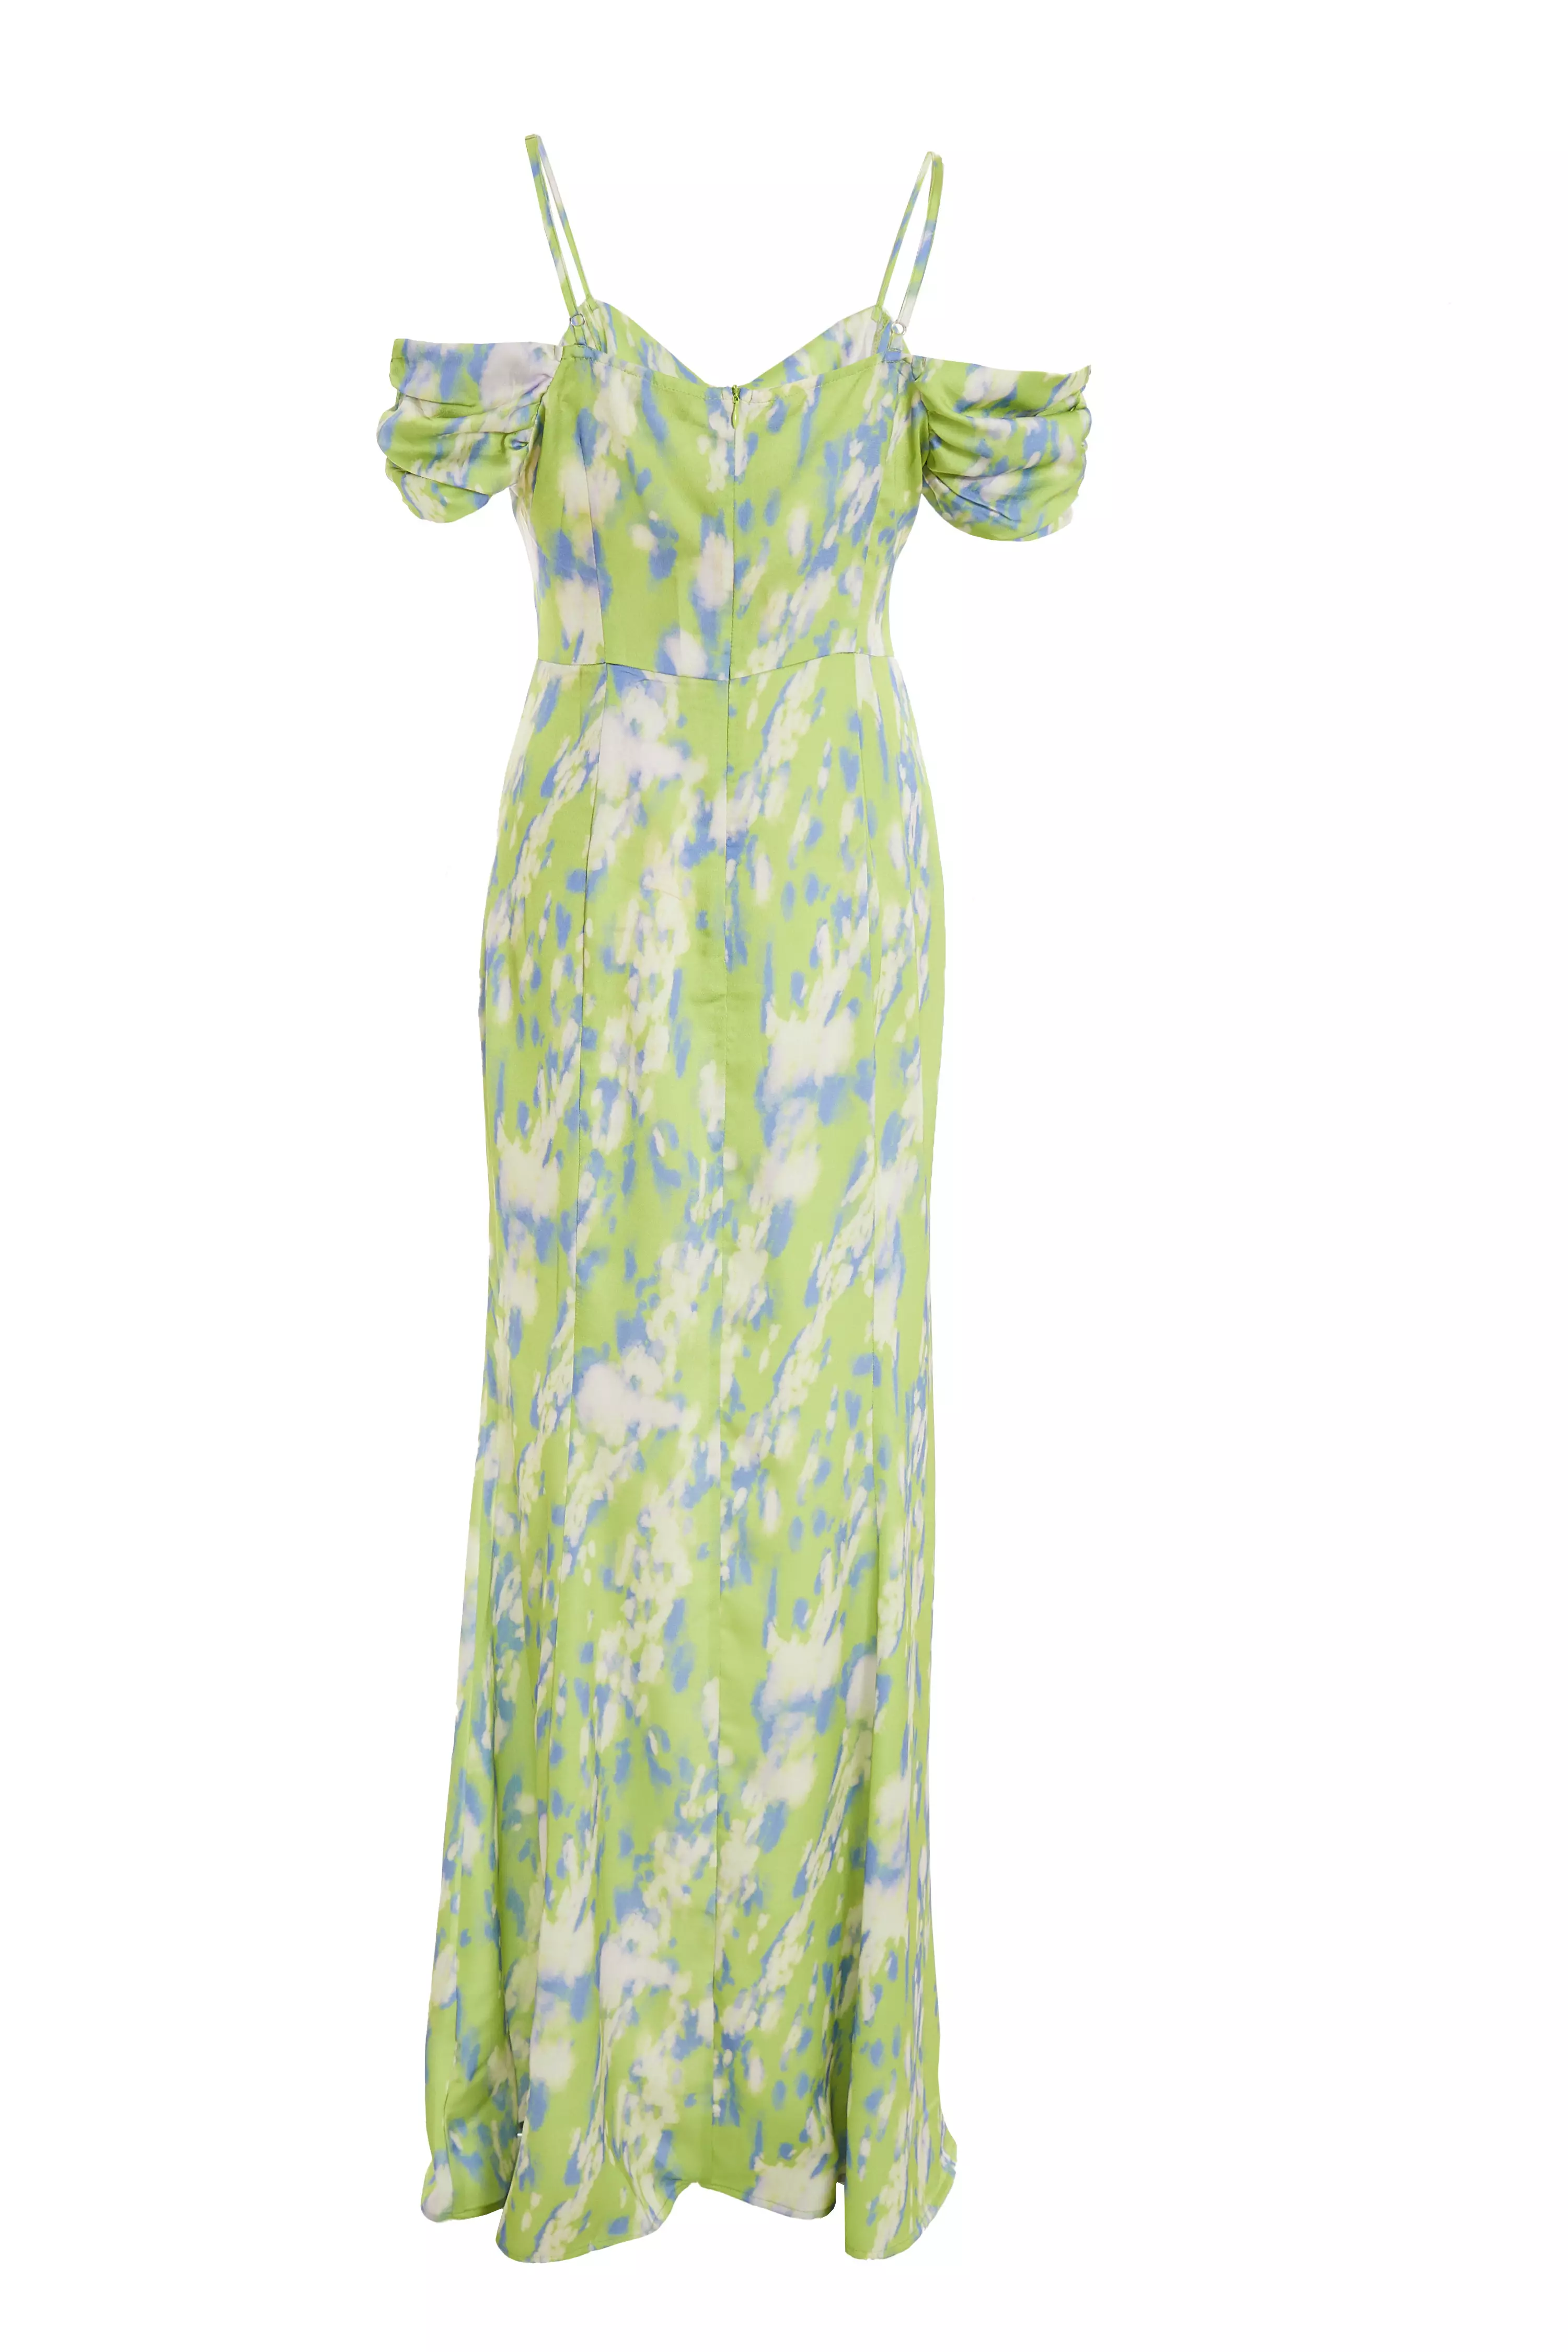 Petite Lime Marble Print Satin Maxi Dress - QUIZ Clothing